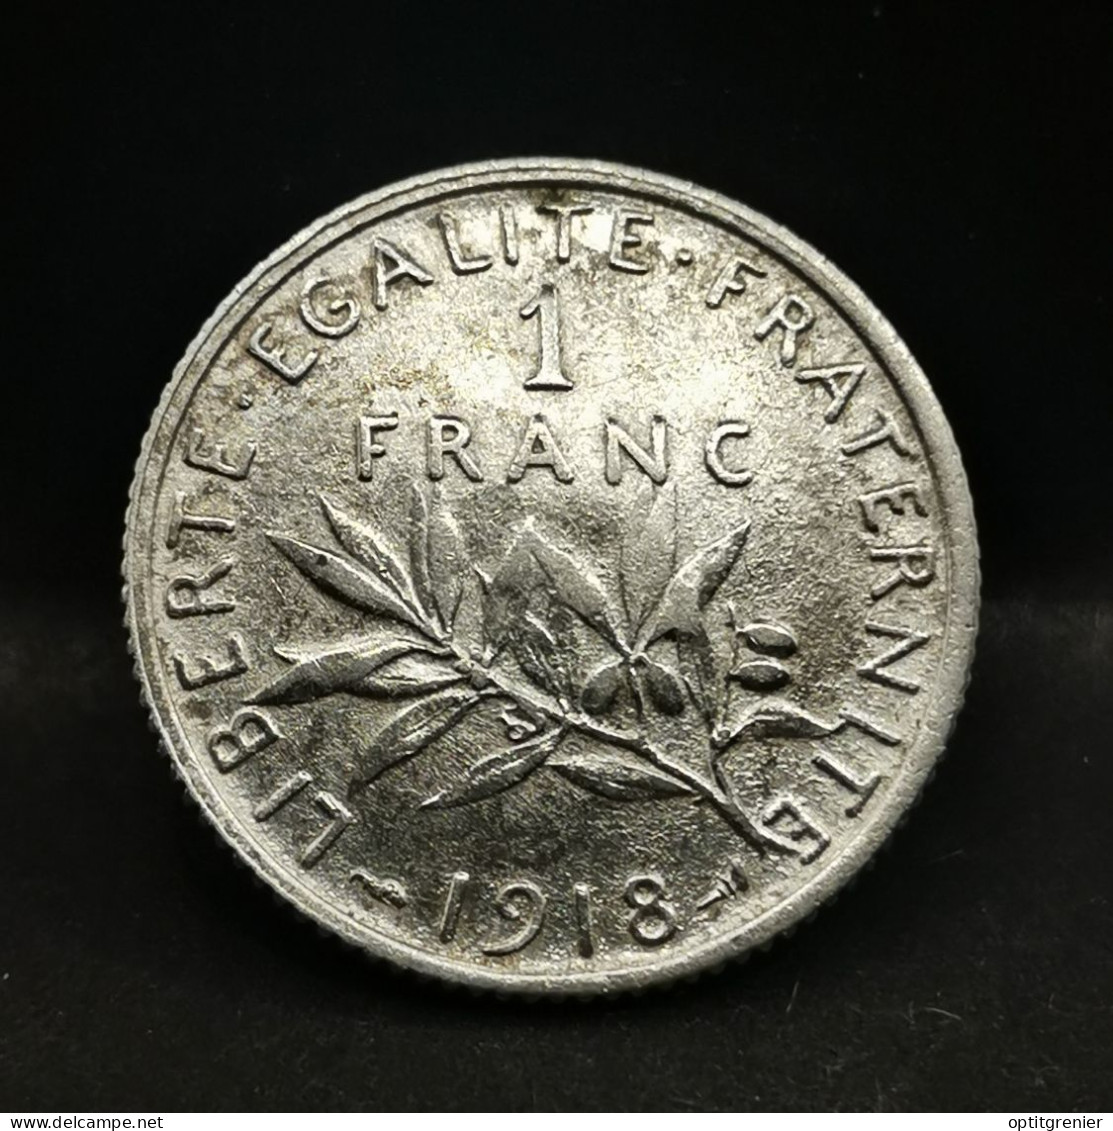 1 FRANC SEMEUSE ARGENT 1918 FRANCE / SILVER (Réf. 24425) - 1 Franc